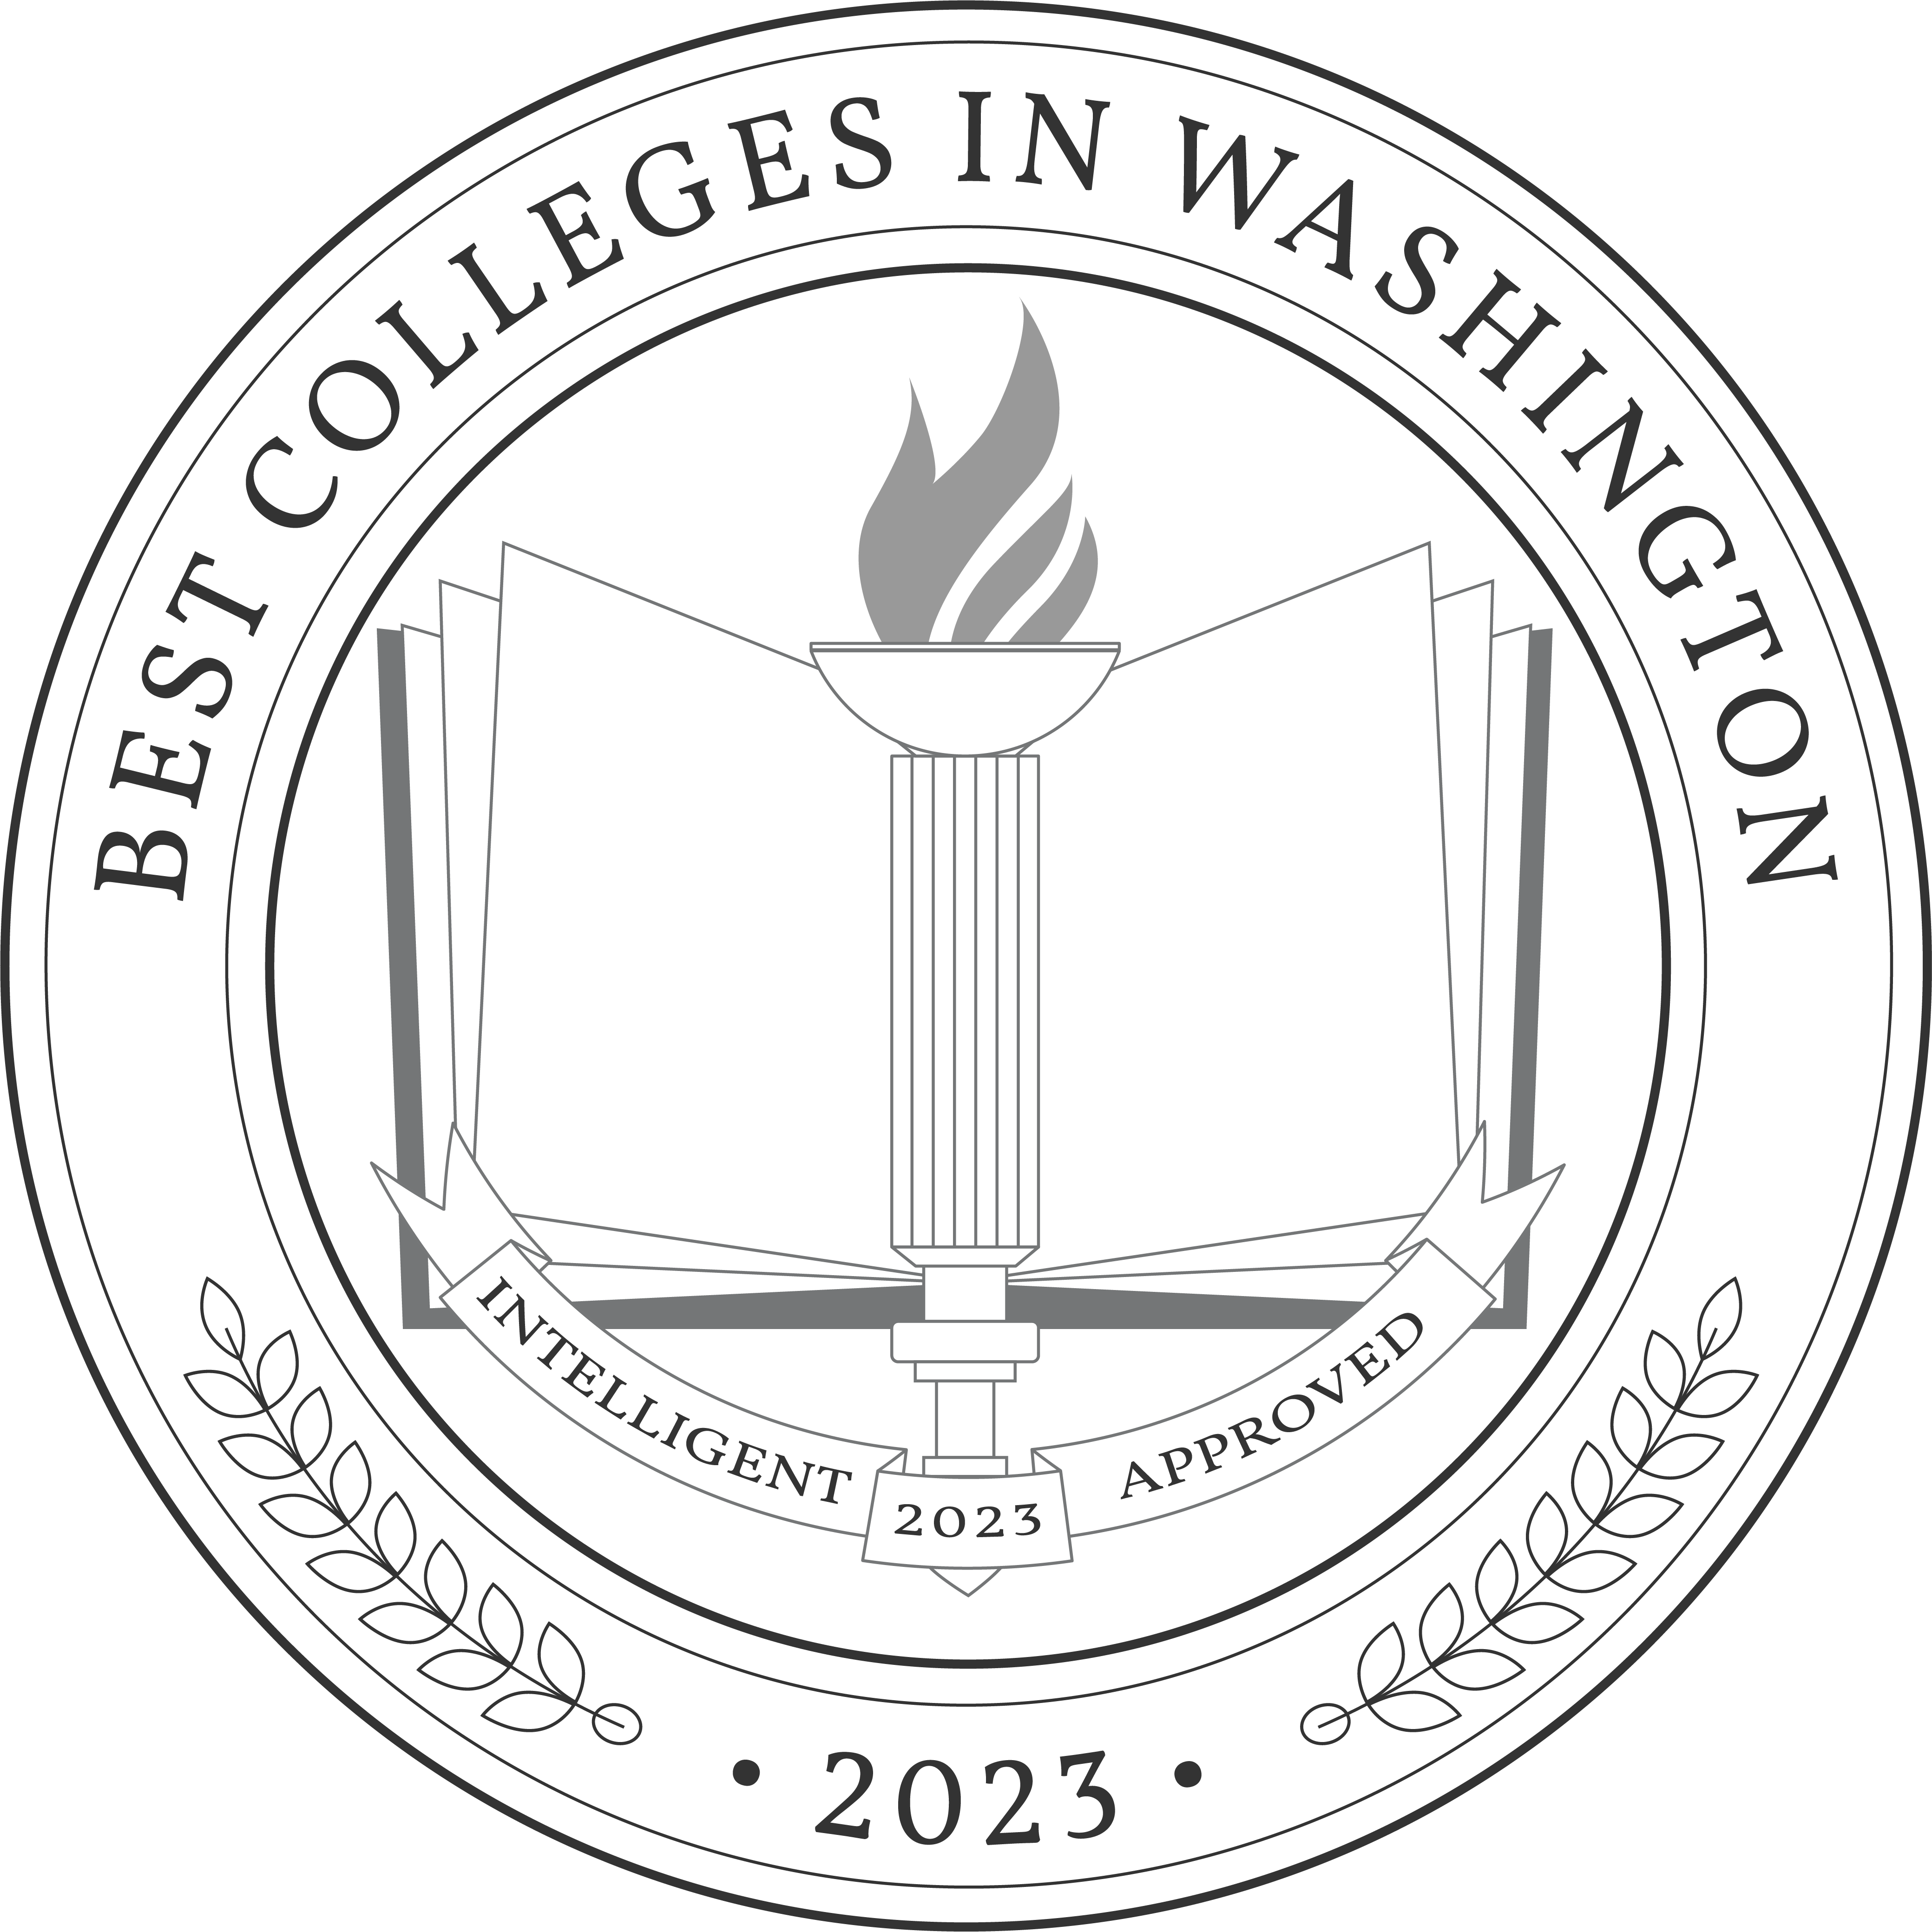 Best Colleges in Washington 2023 Badge